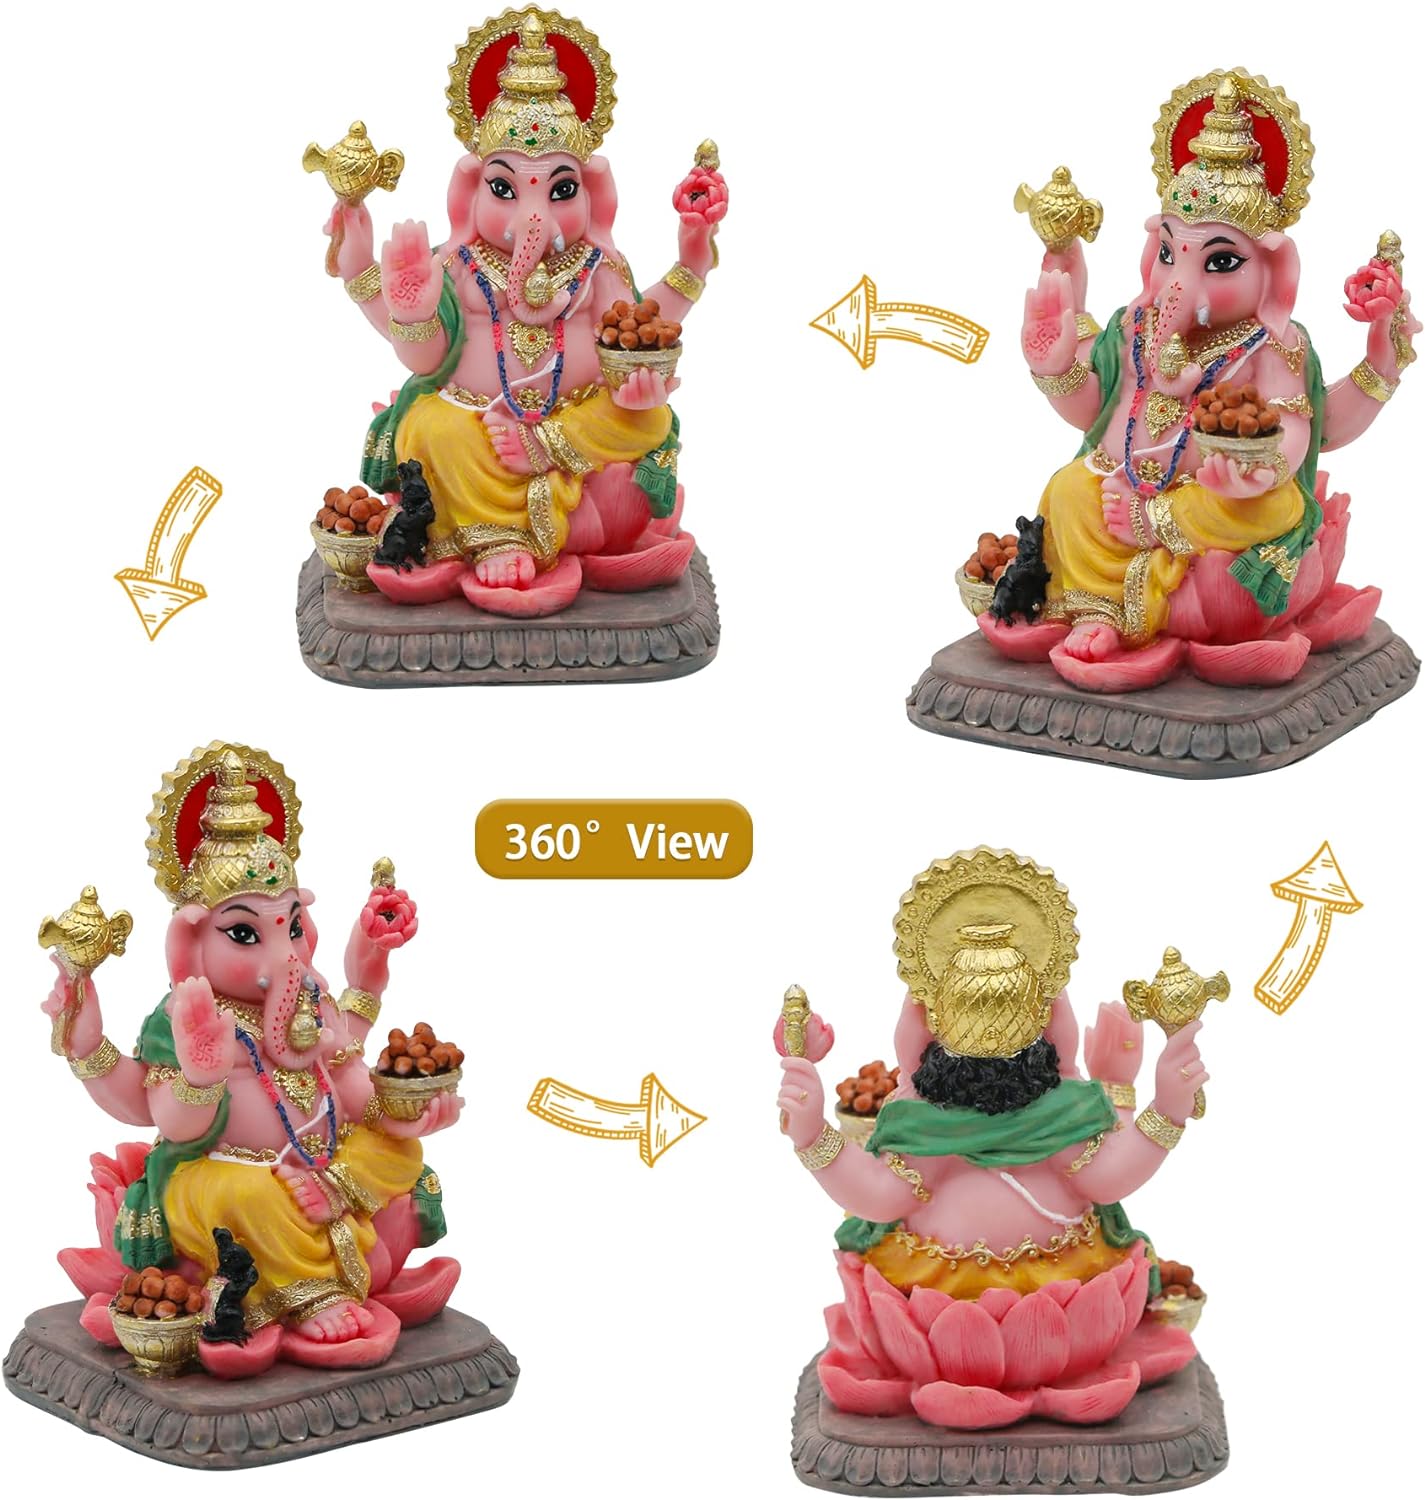 alikiki Indian God Lord Ganesha Statue - 4.1”H Multicolor Hindu Idol Ganesh for Car Dashboard Decor India Murit Home Office Mandir Temple Altar Pooja Item Diwali Puja Gifts